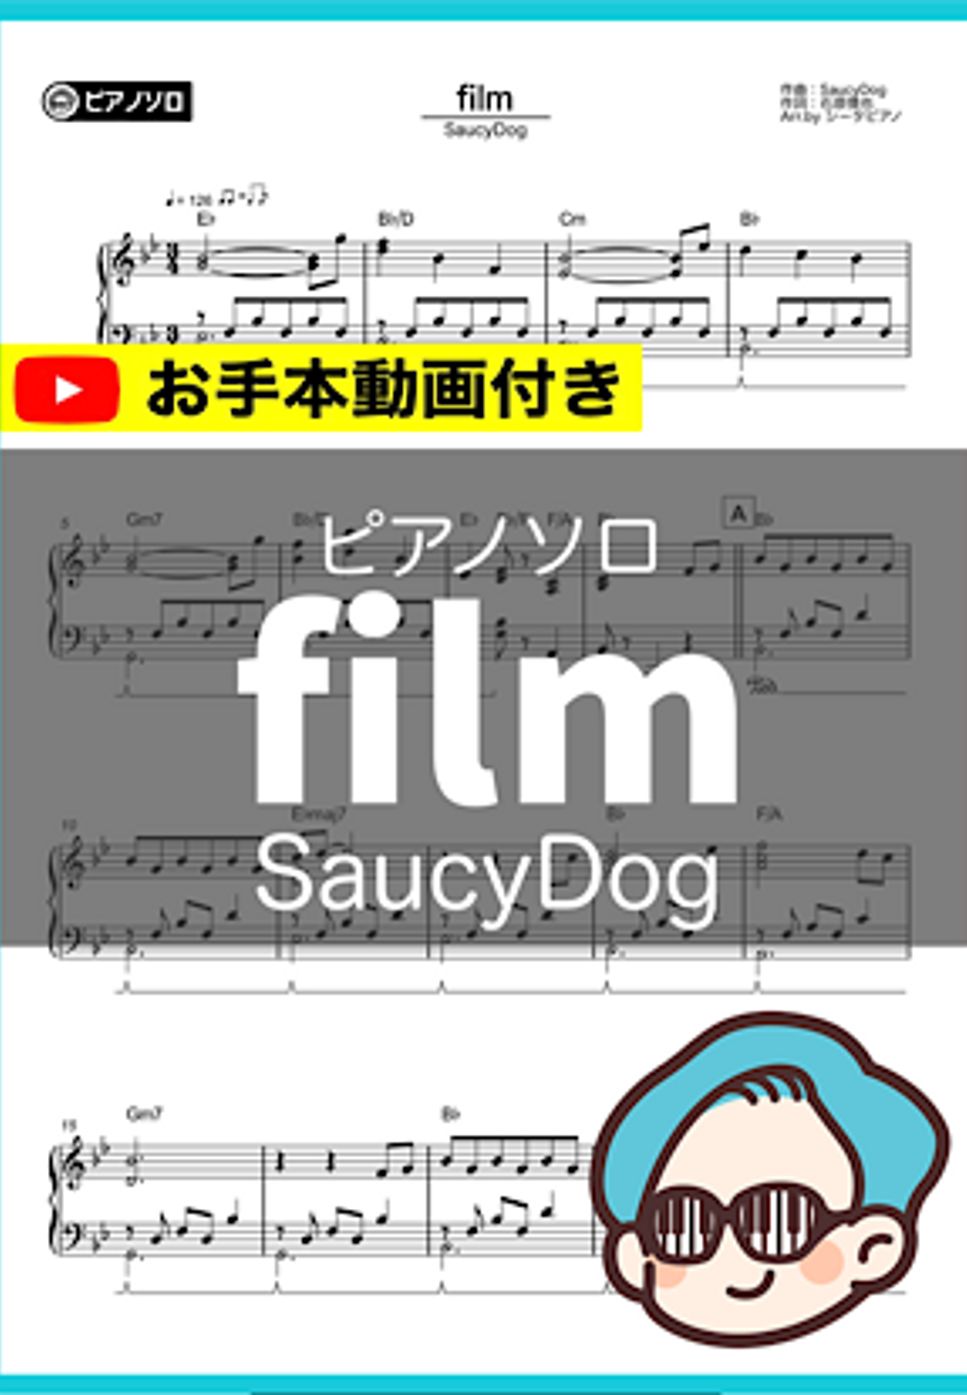 SaucyDog - film by シータピアノ